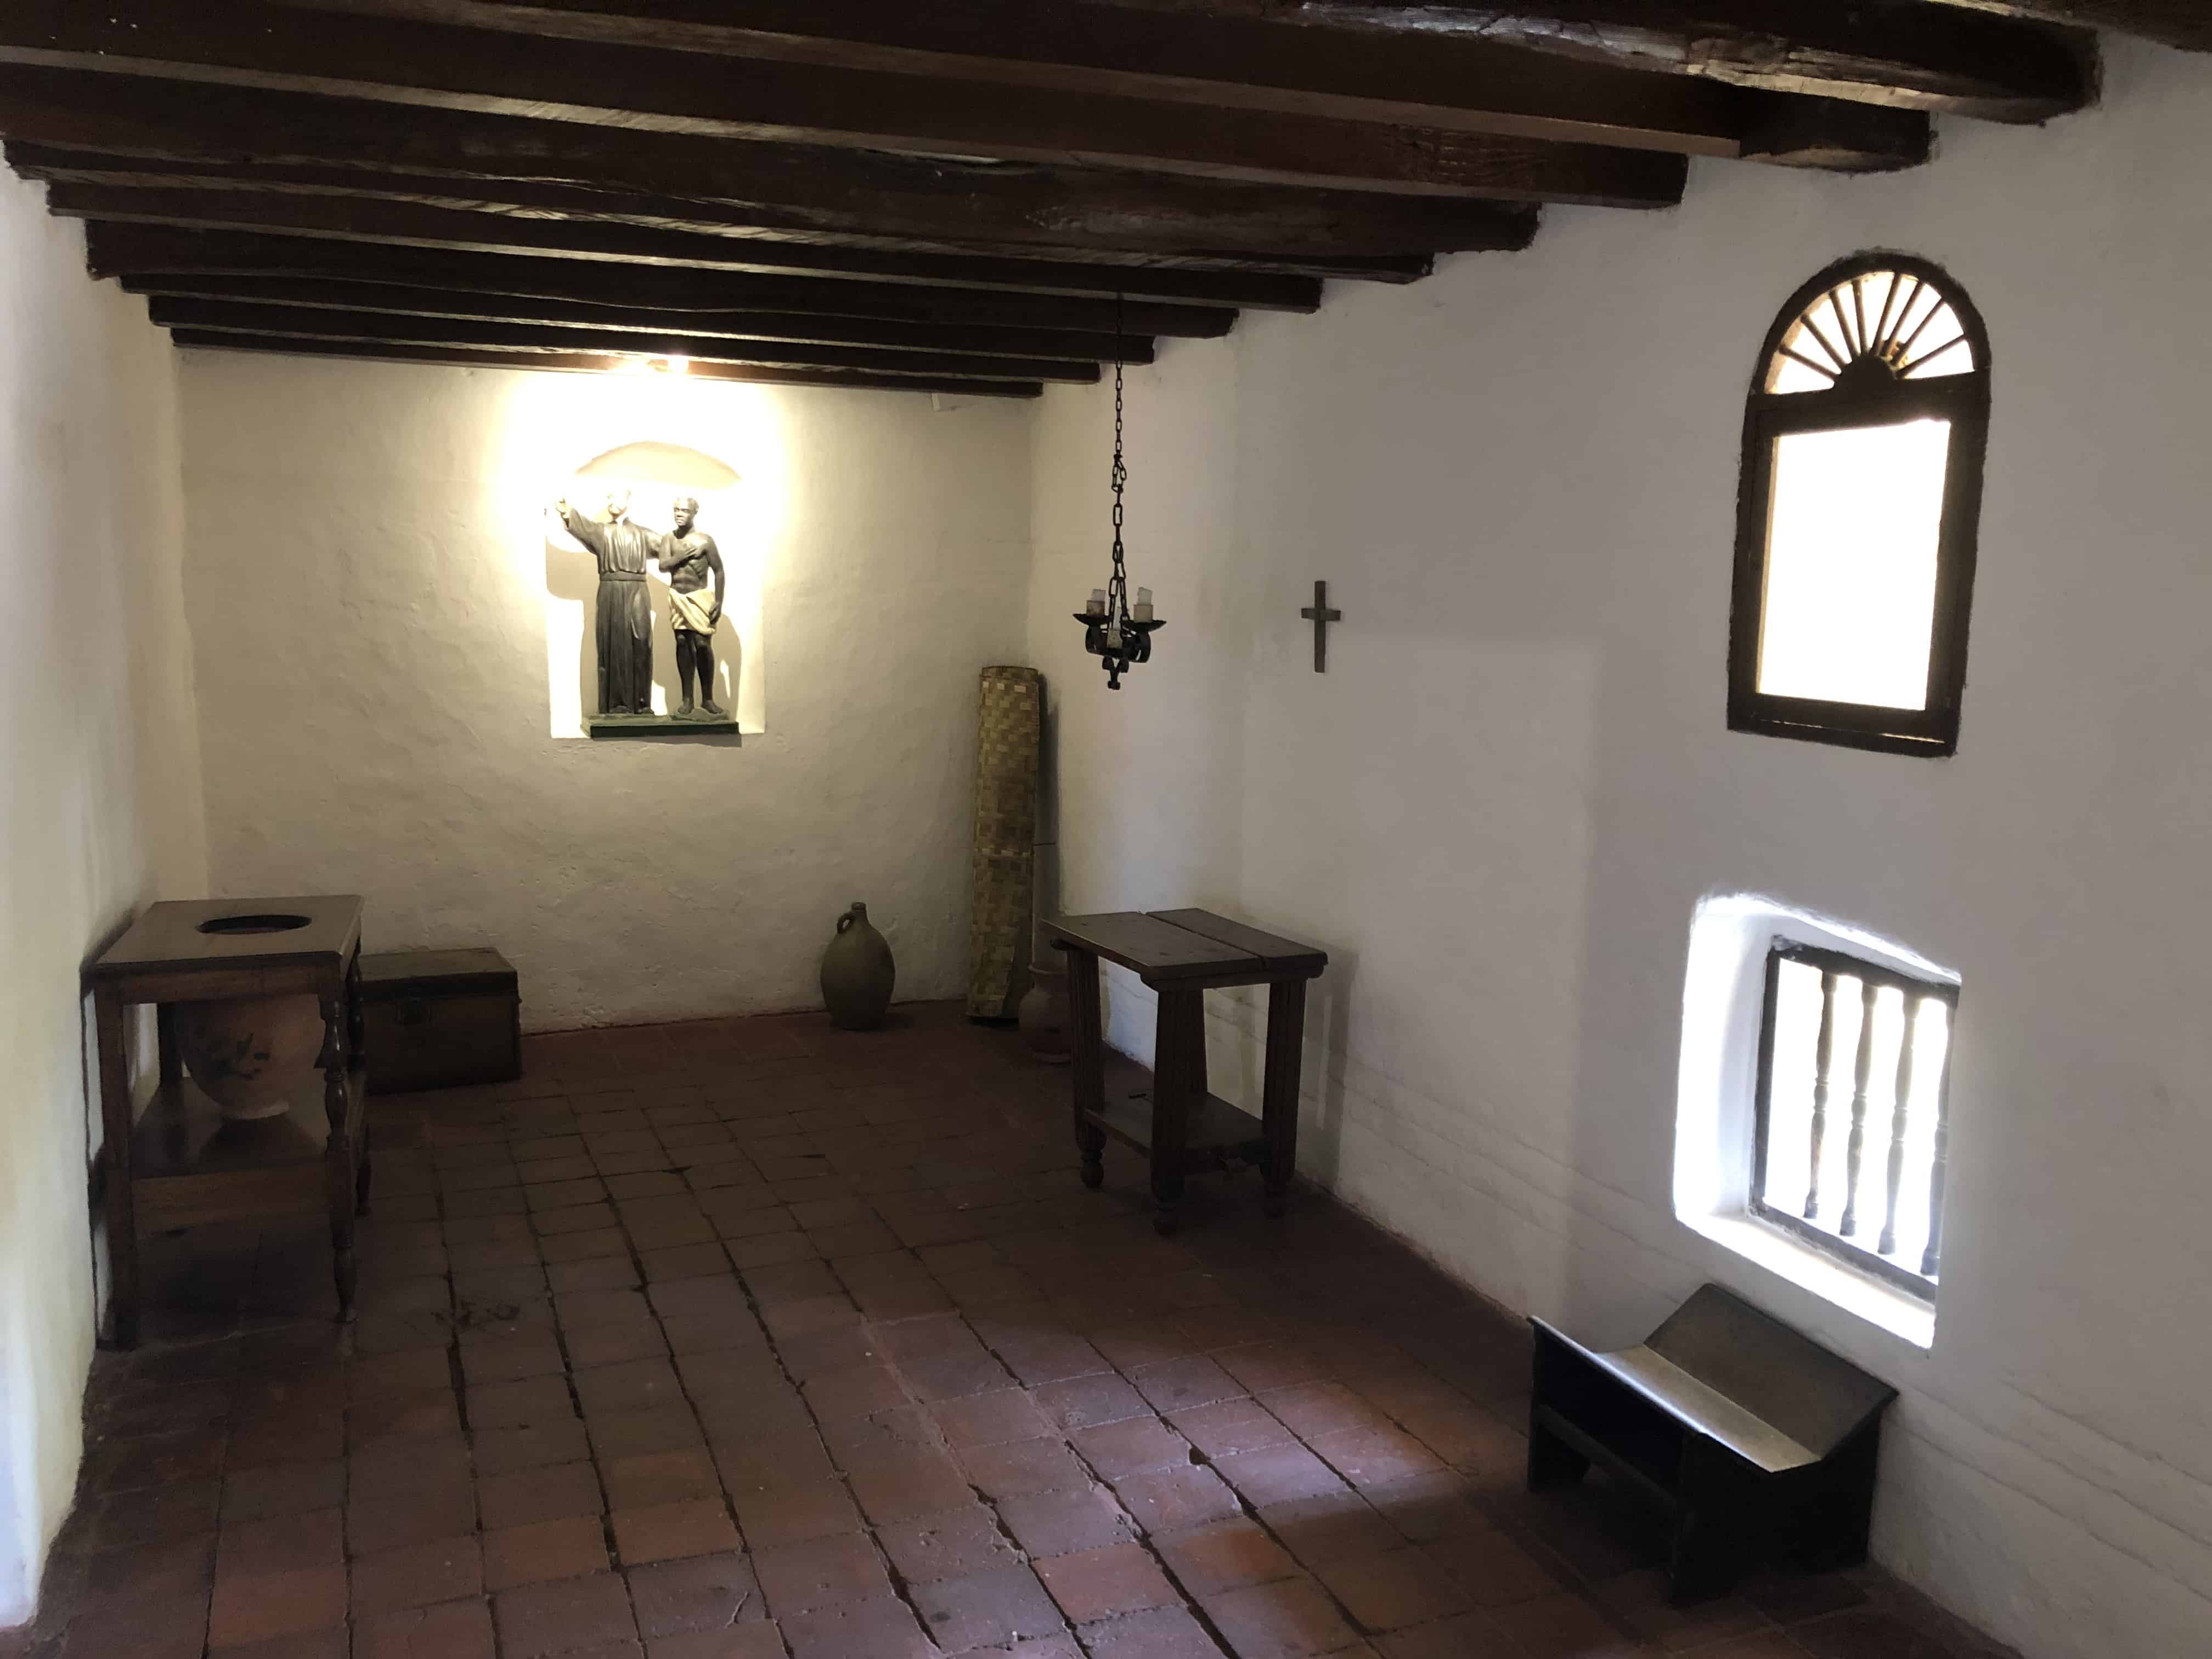 Dormitory of San Pedro Claver at the Sanctuary of San Pedro Claver Museum in Cartagena, Colombia